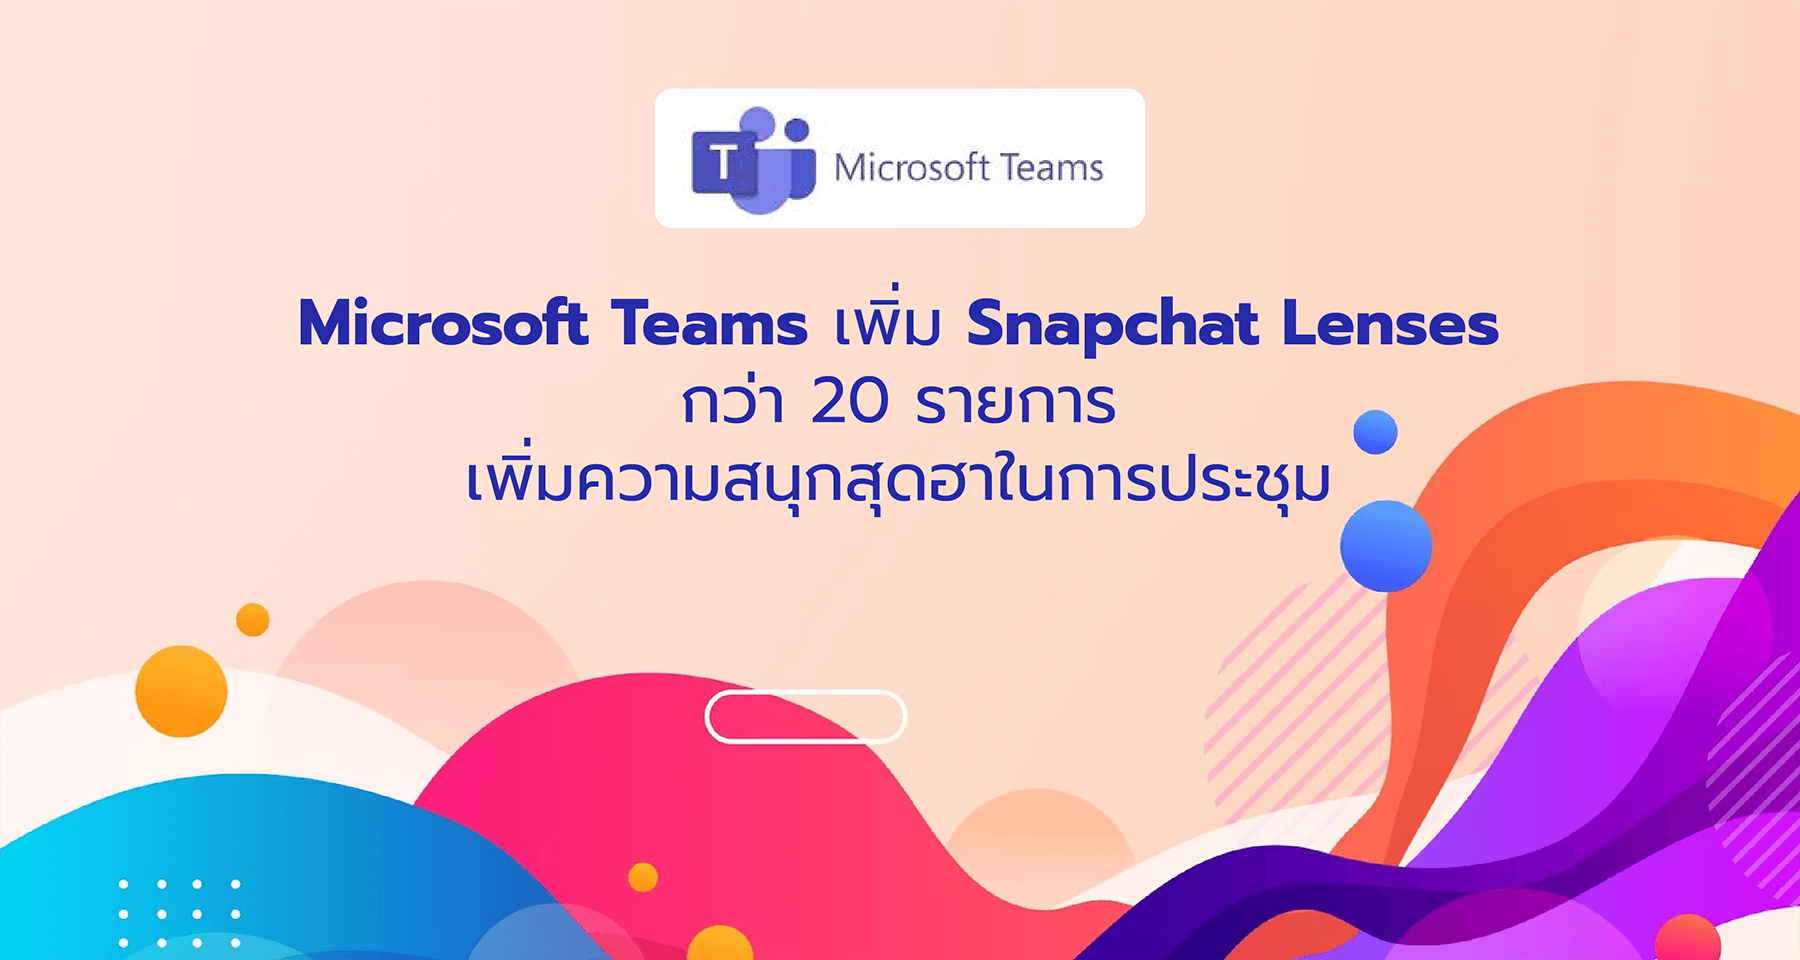 Microsoft Teams เพิ่ม Snapchat Lenses กว่า 20 รายการเพิ่มความสนุกสุดฮาในการประชุม